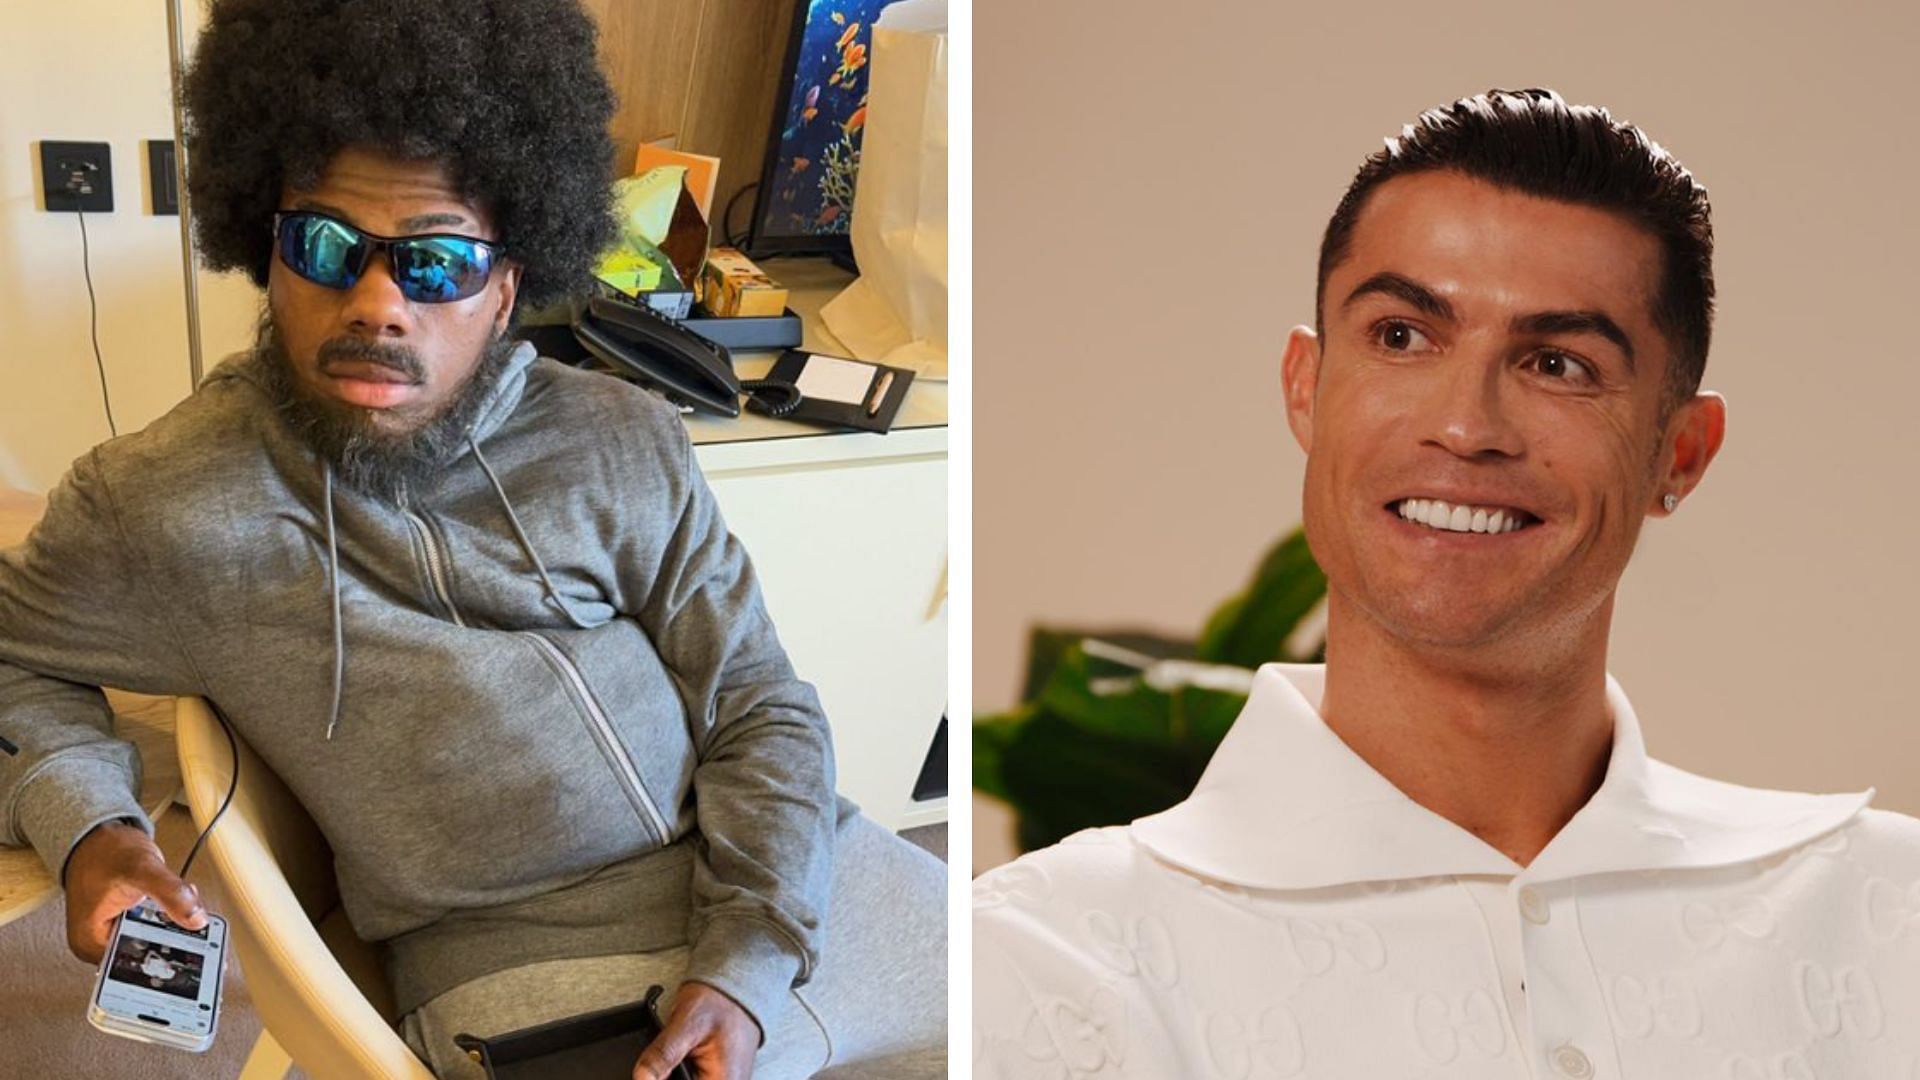 IShowSpeed disguises himself like Cristiano Ronaldo